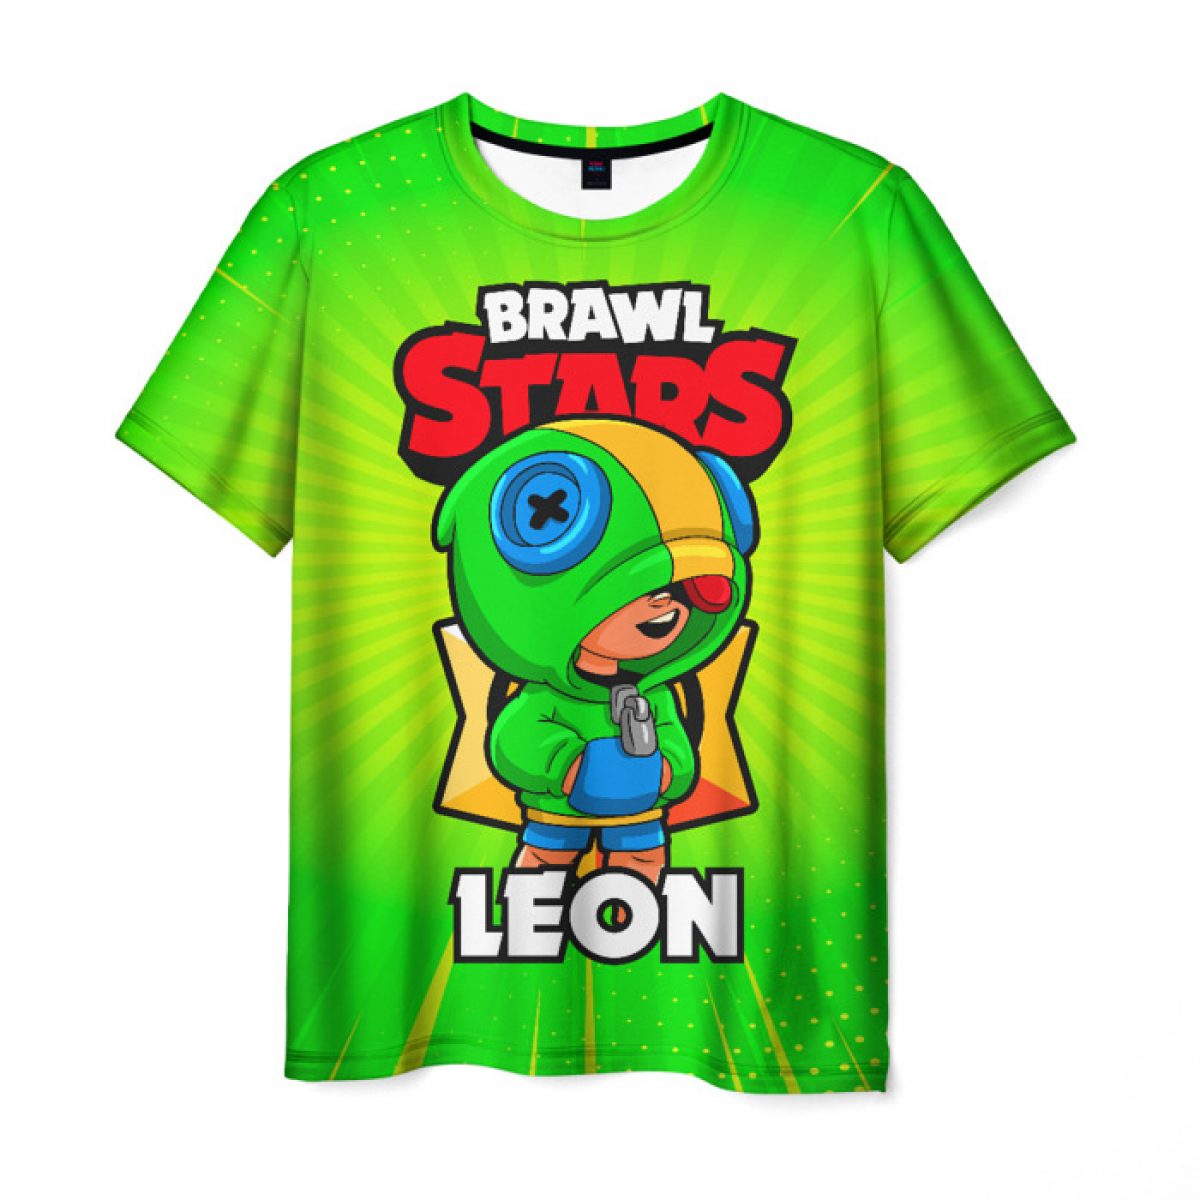 Buy Men S T Shirt Green Design Print Brawl Stars Leon Idolstore - t shirt brawl stars léon